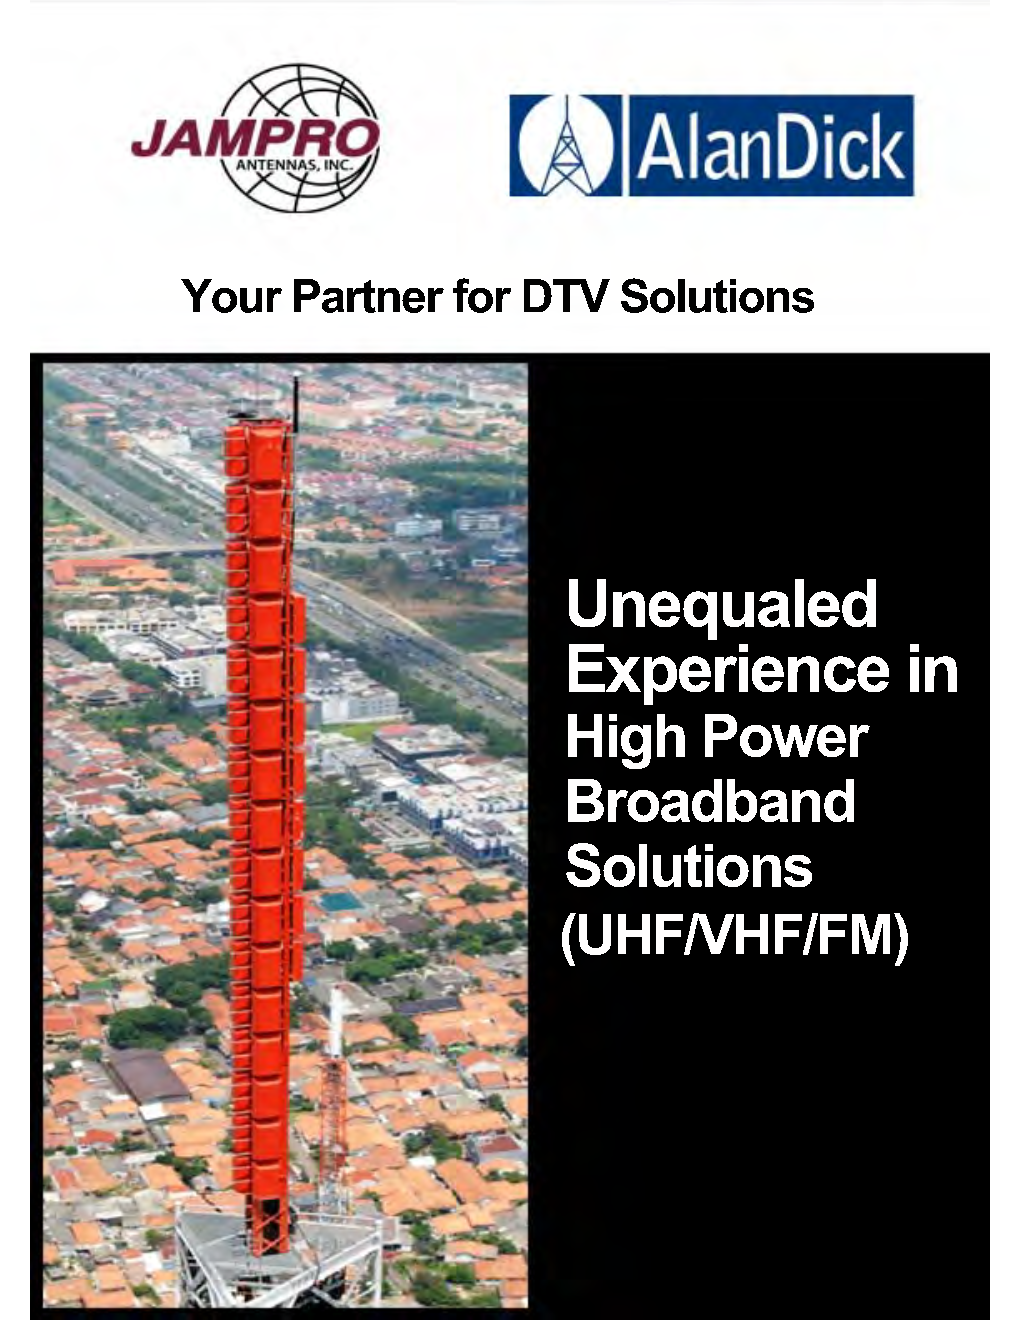 UHF Slot Antennas for the U.S